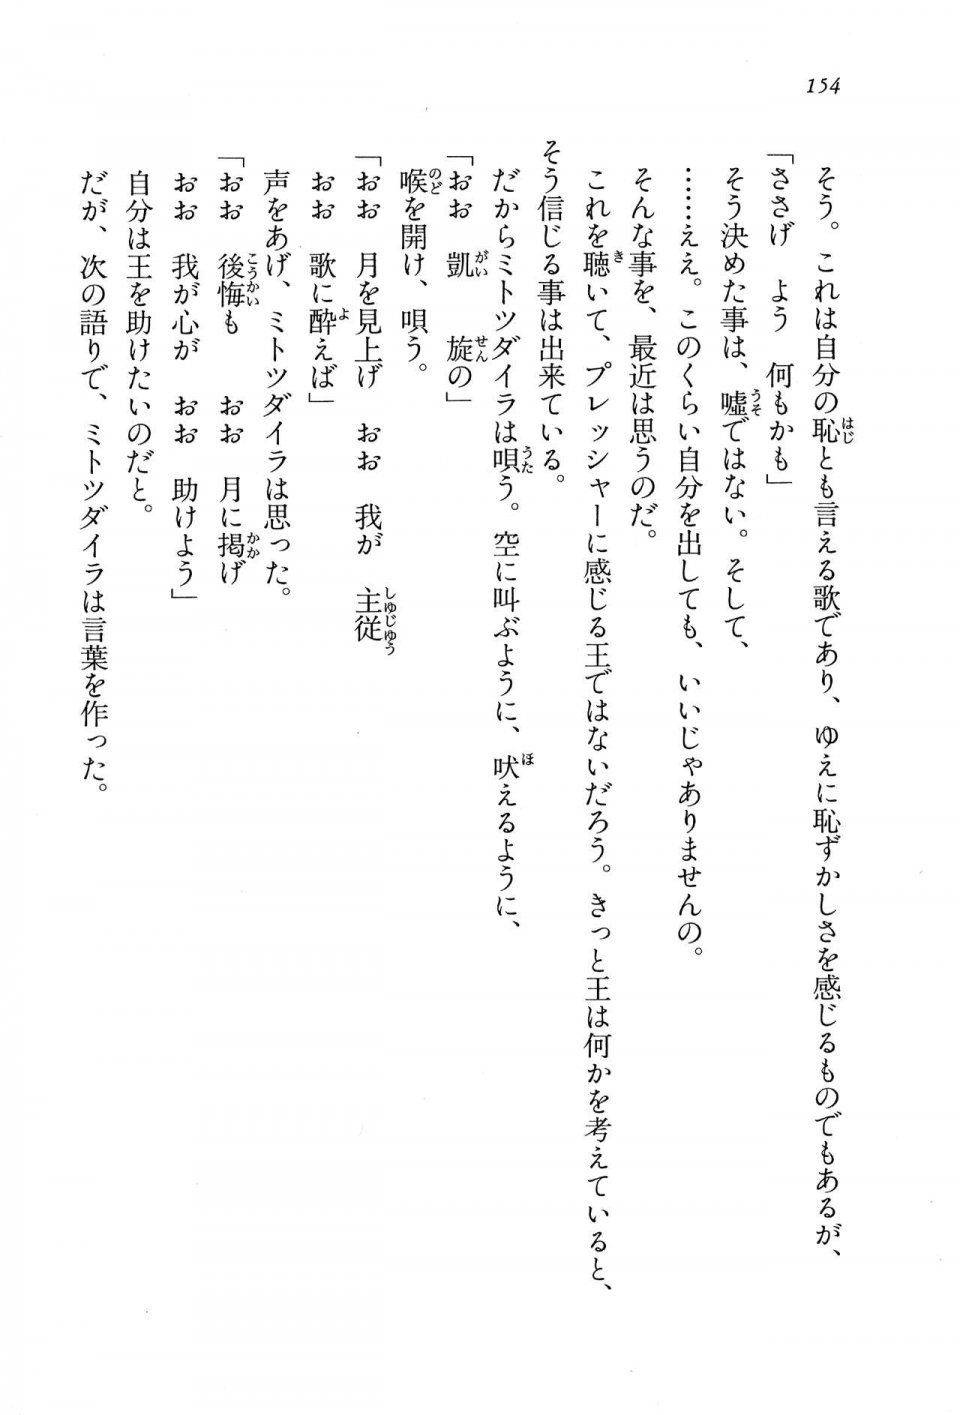 Kyoukai Senjou no Horizon BD Special Mininovel Vol 8(4B) - Photo #158